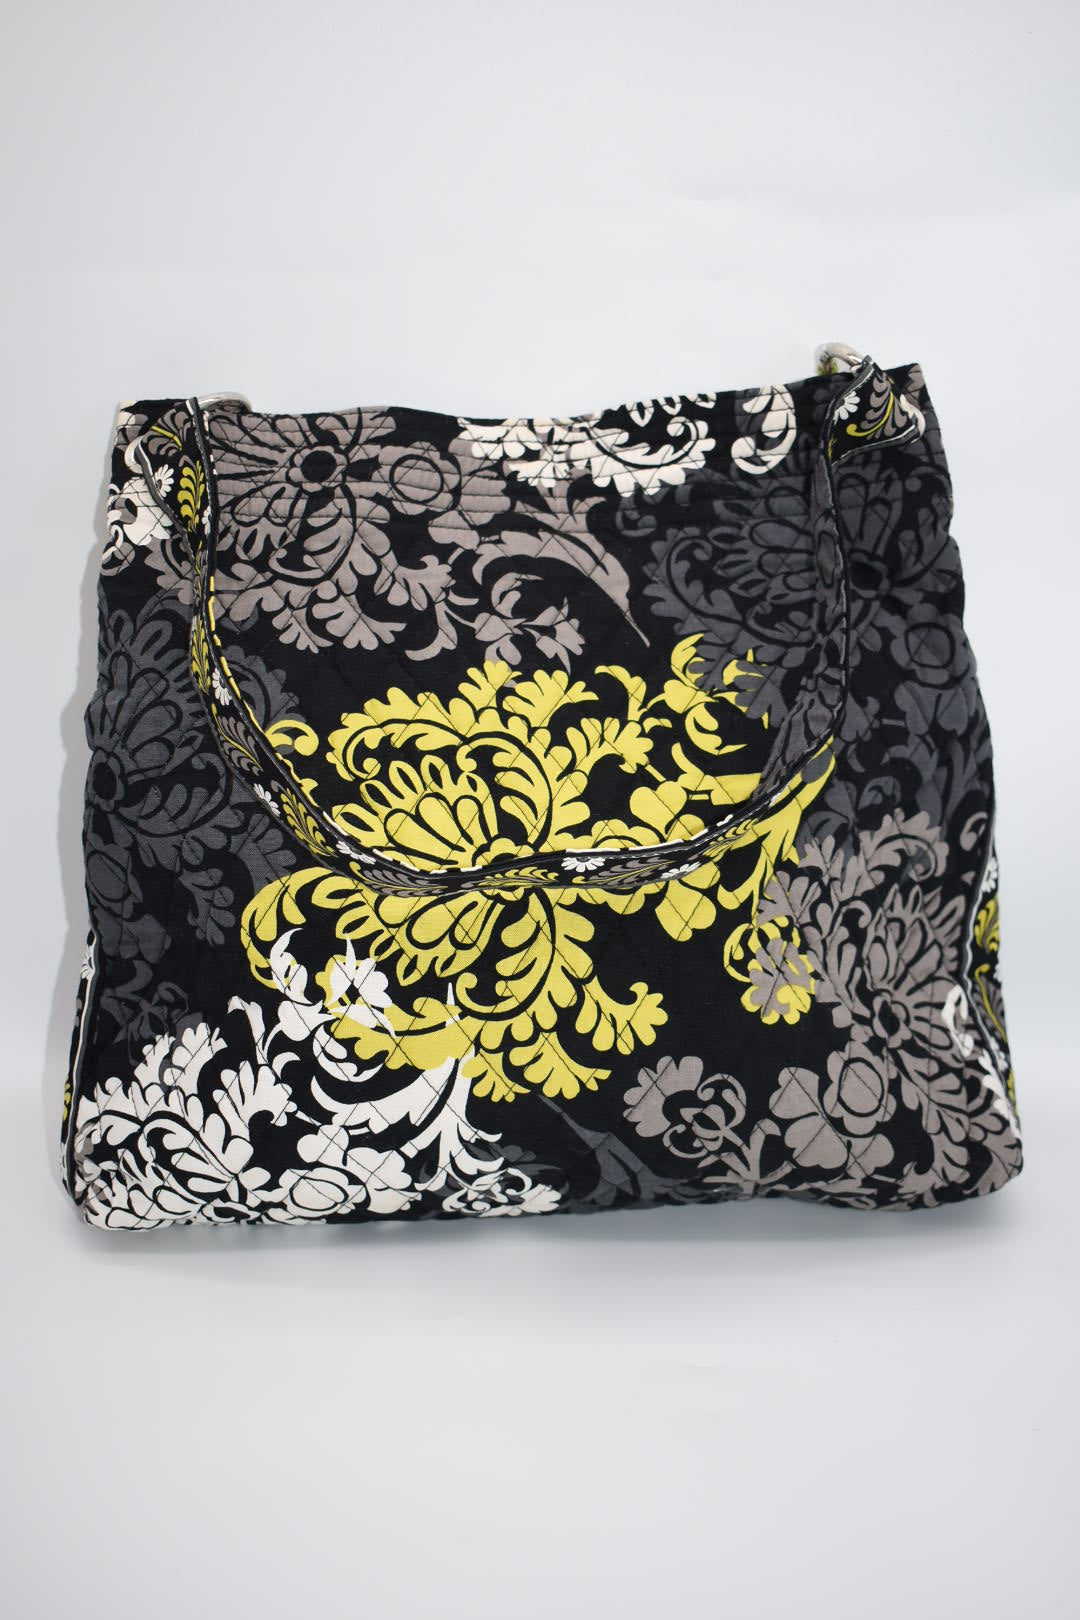 Vera Bradley Holiday Tote Bag in "Baroque" Pattern